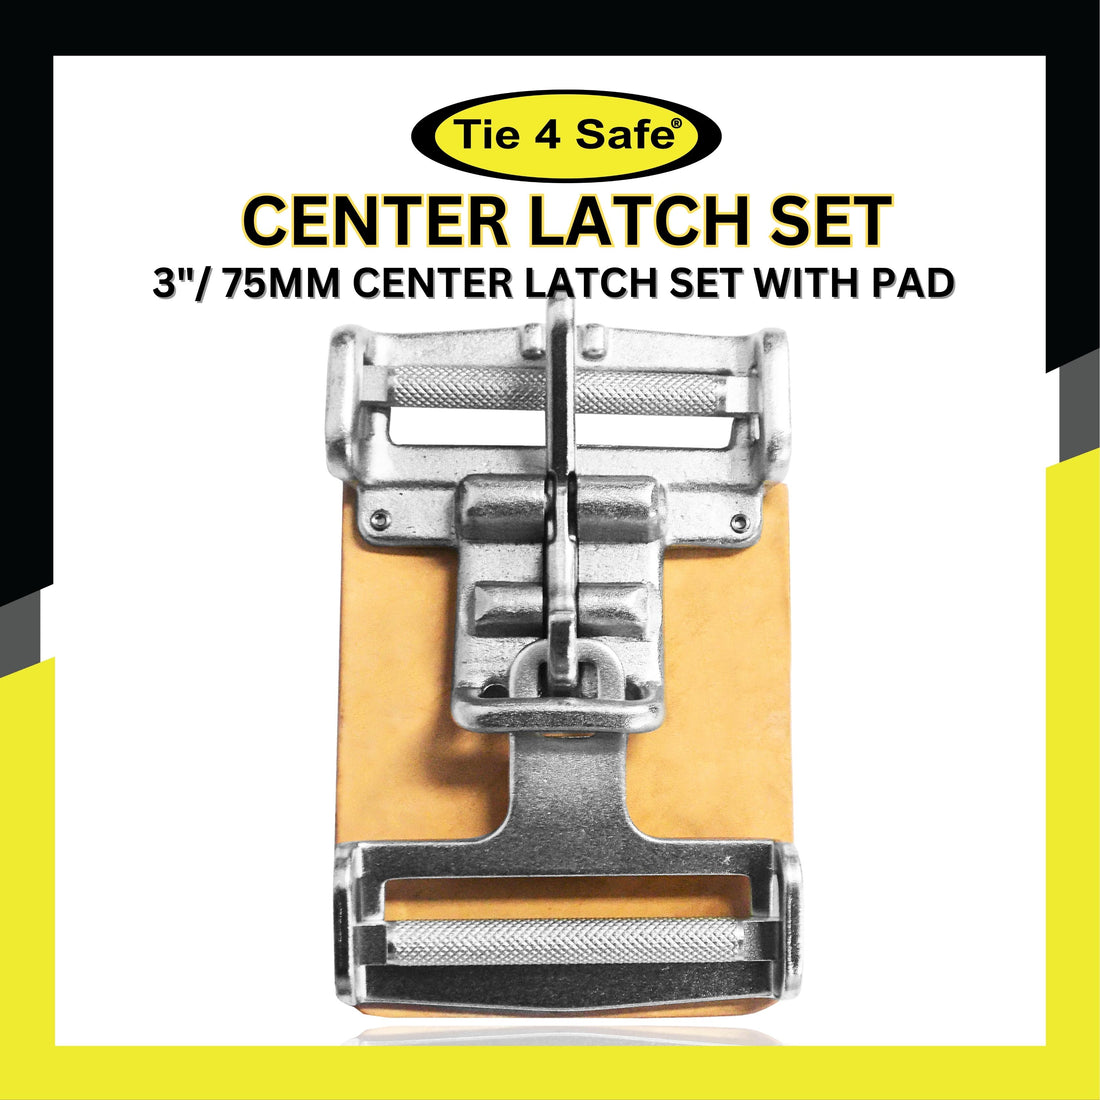 3"/ 75mm Center Latch Set